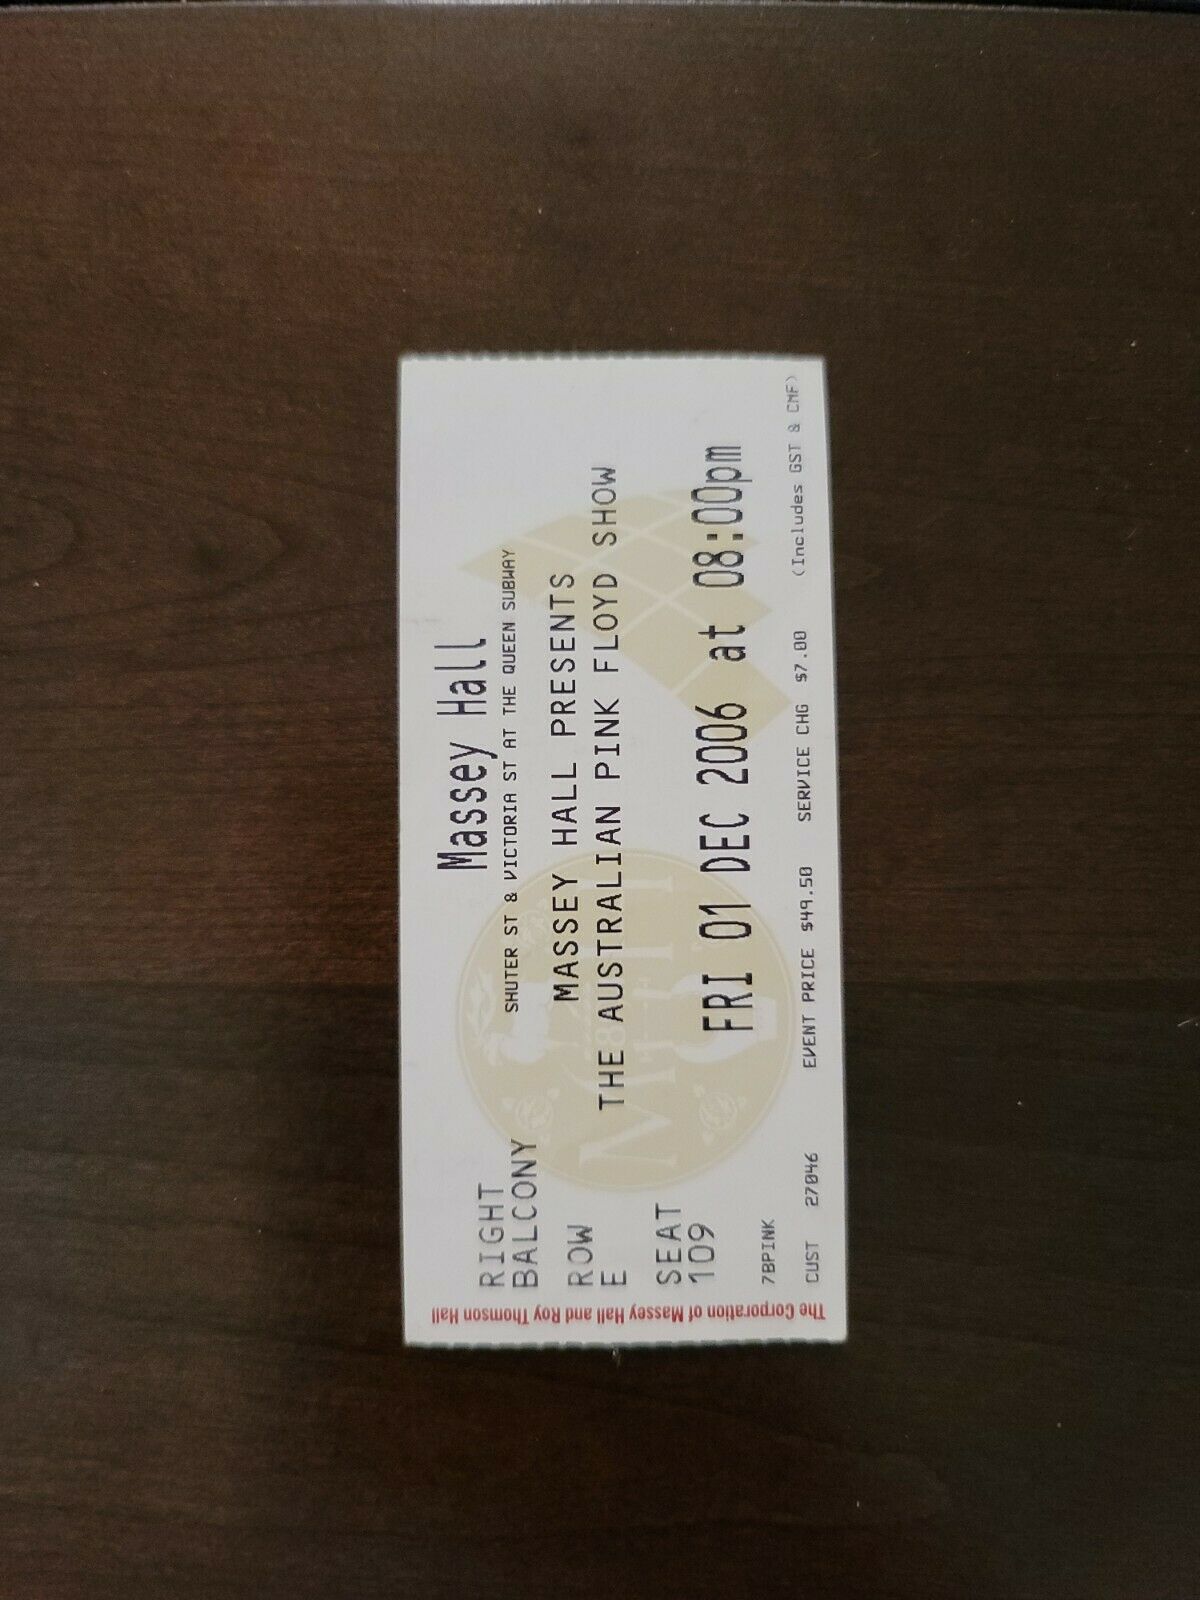 Australian Pink Floyd 2006, Toronto Massey Hall Original Concert Ticket Stub